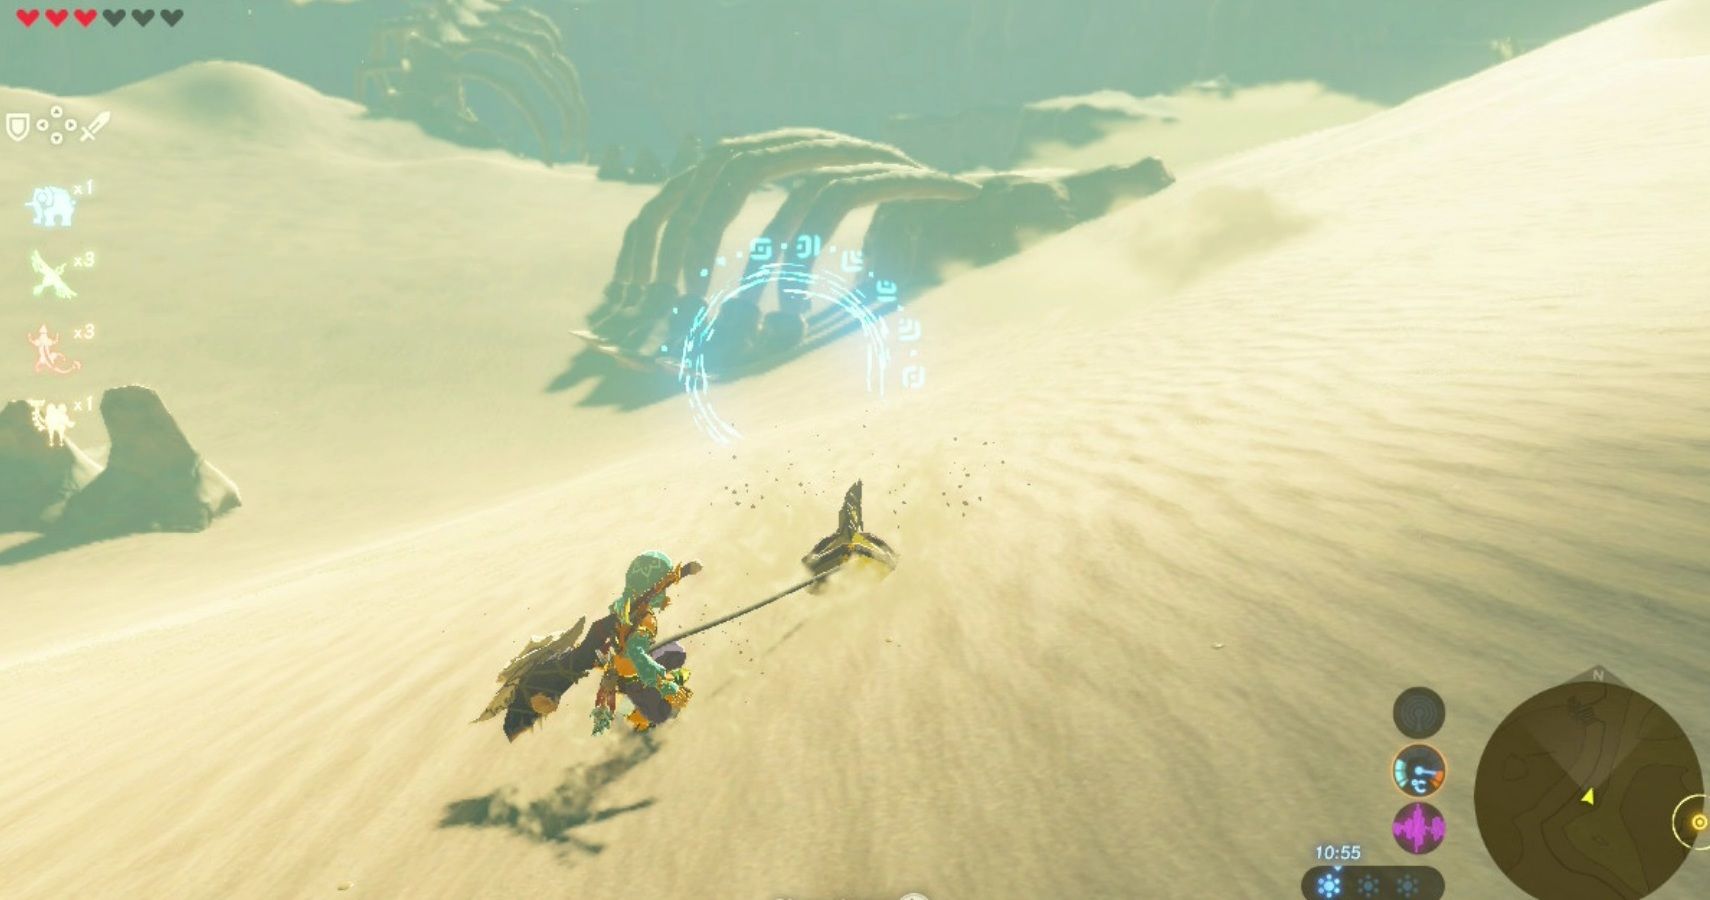 Zelda: Tips For Taking Urbosa's Song Breath Of The Wild's DLC